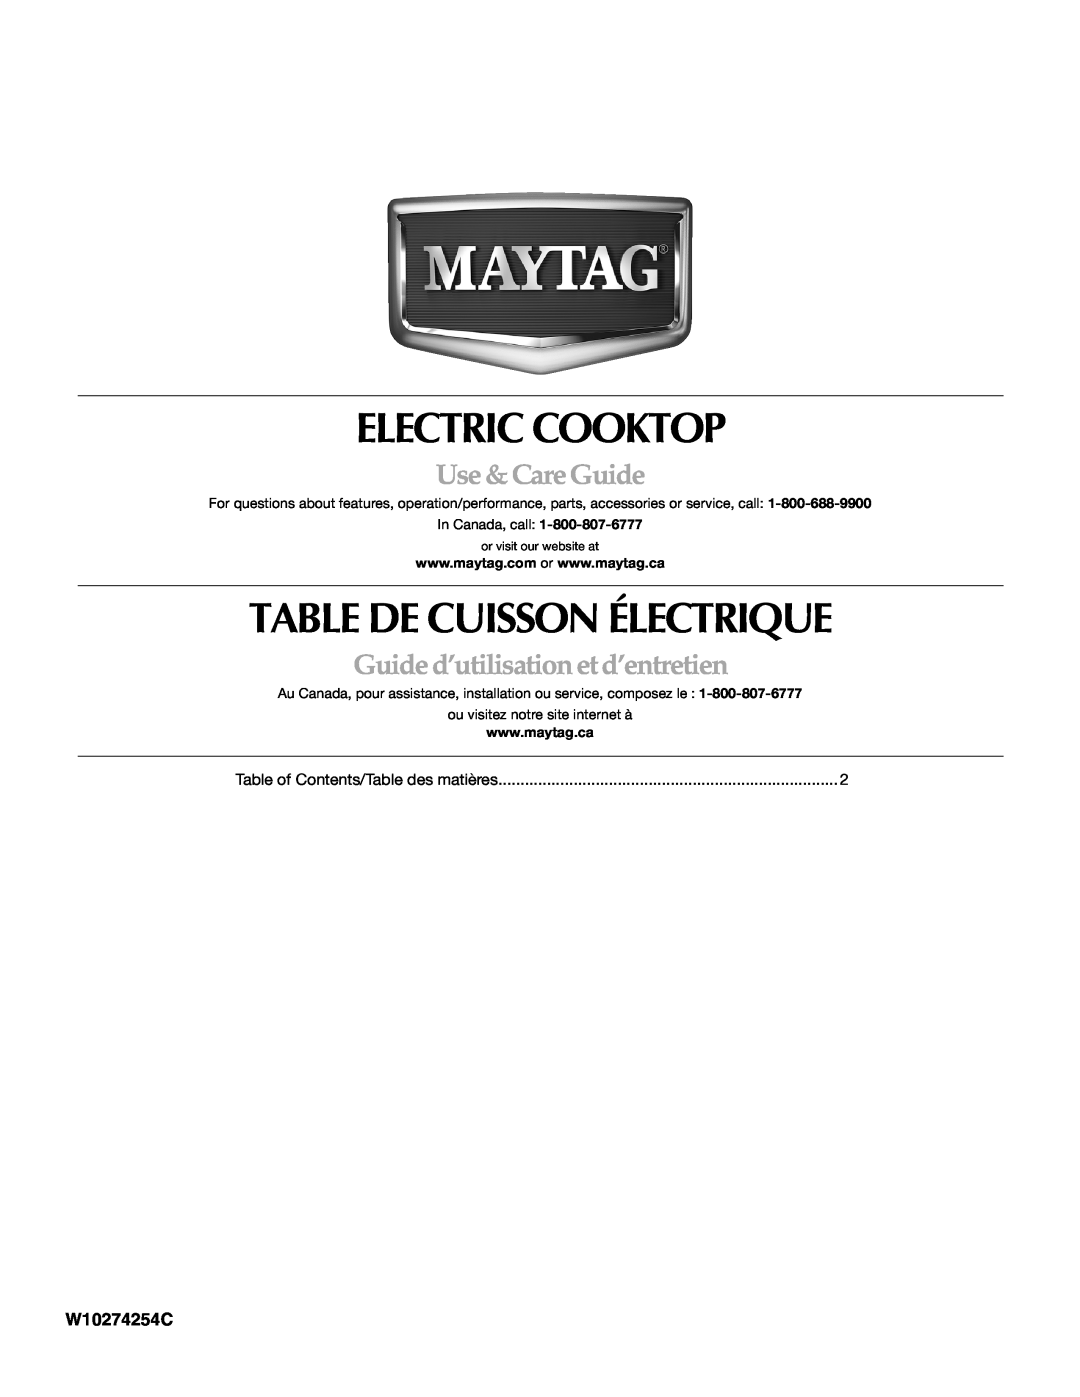 Maytag W10274254C manual Electric Cooktop, Table De Cuisson Électrique, Use &CareGuide, Guided’utilisationetd’entretien 